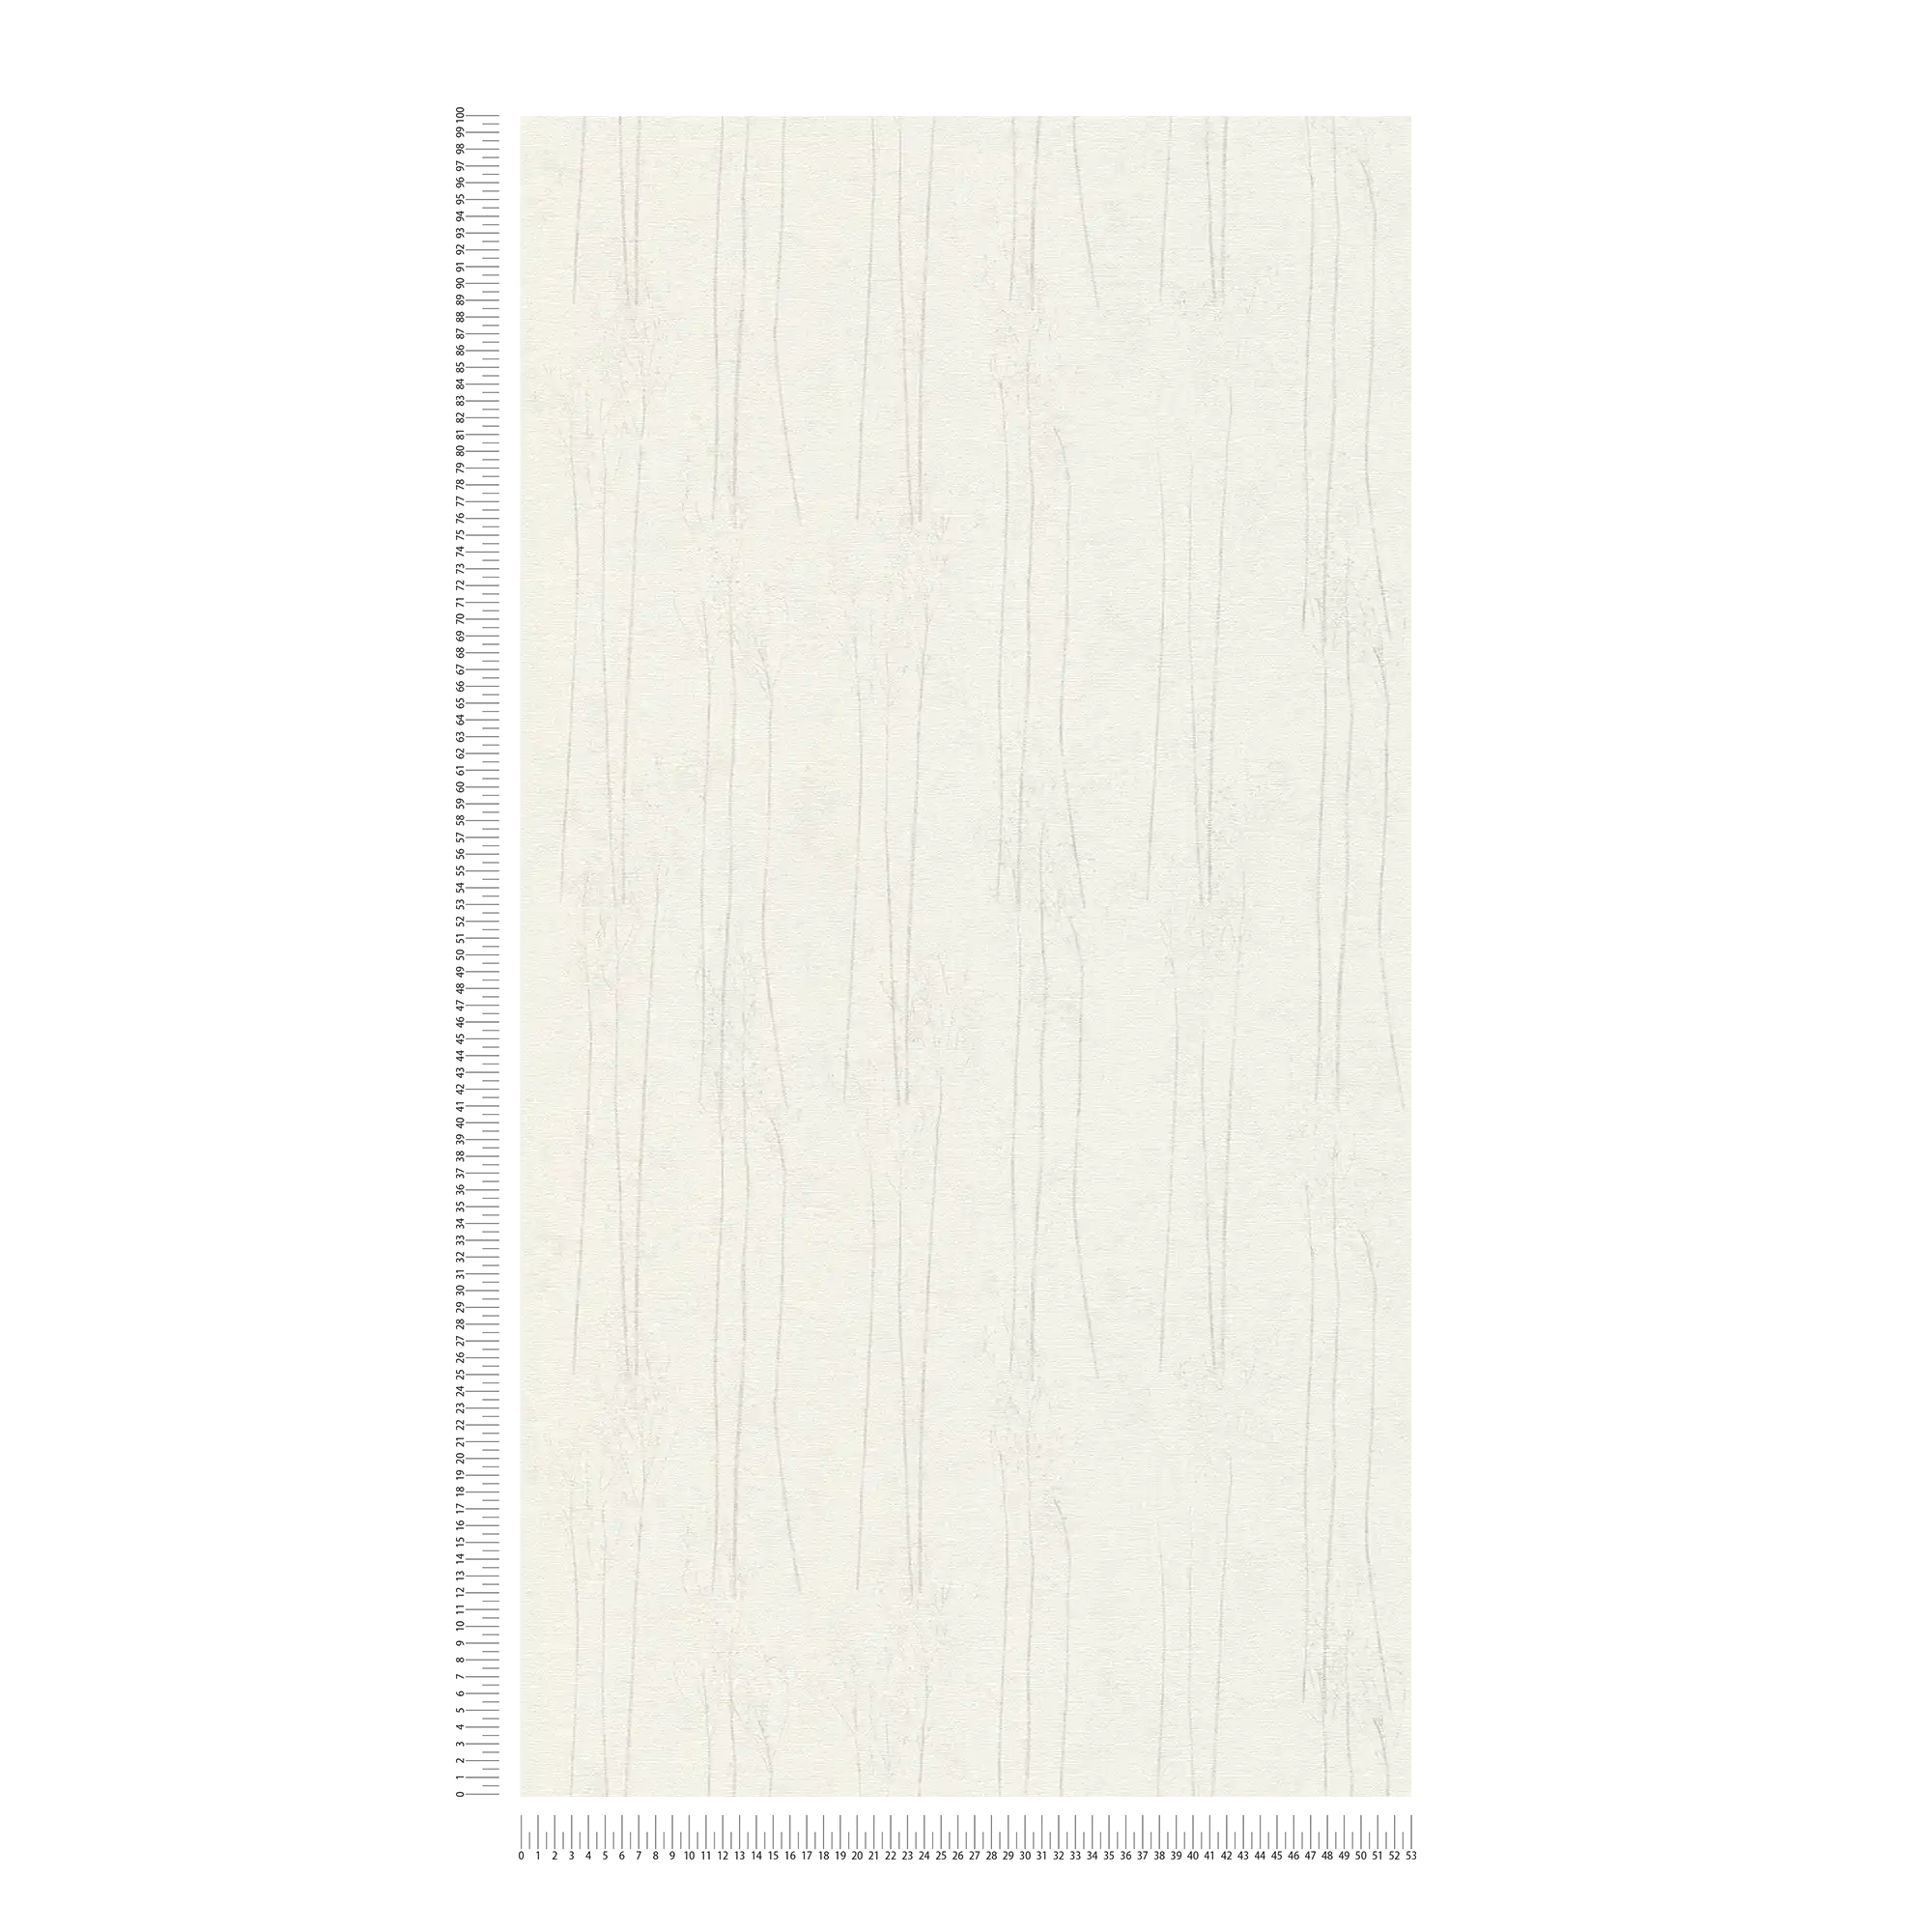             Papel pintado blanco de estilo escandinavo con motivos de la naturaleza - gris, blanco
        